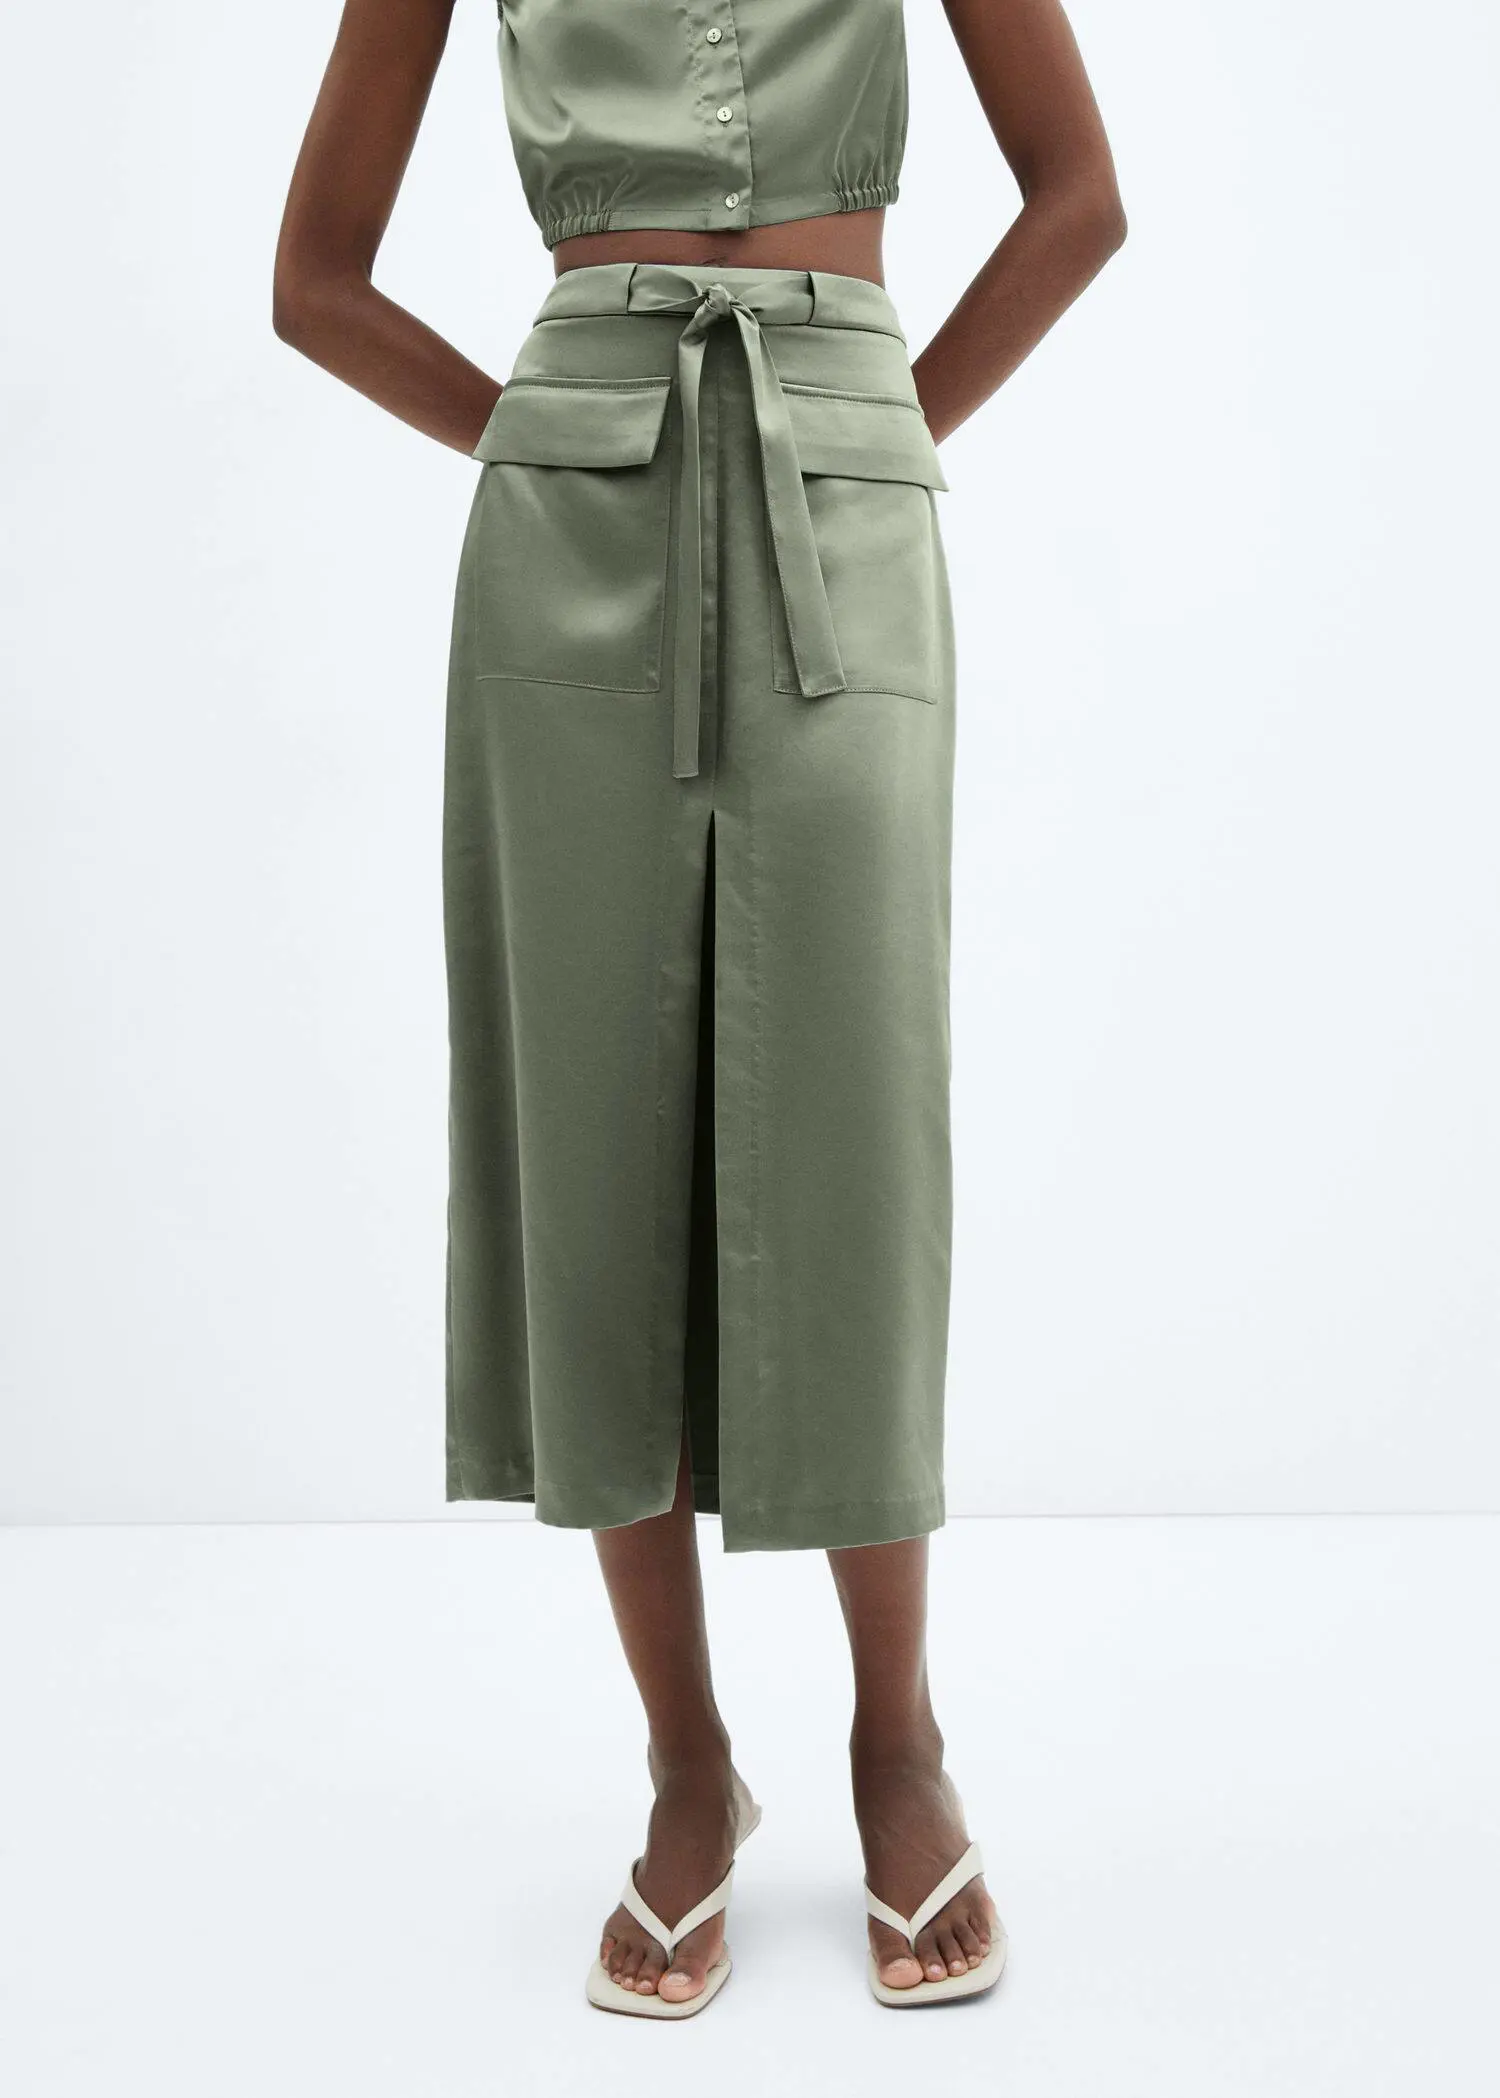 Mango Satin skirt with pockets. 2